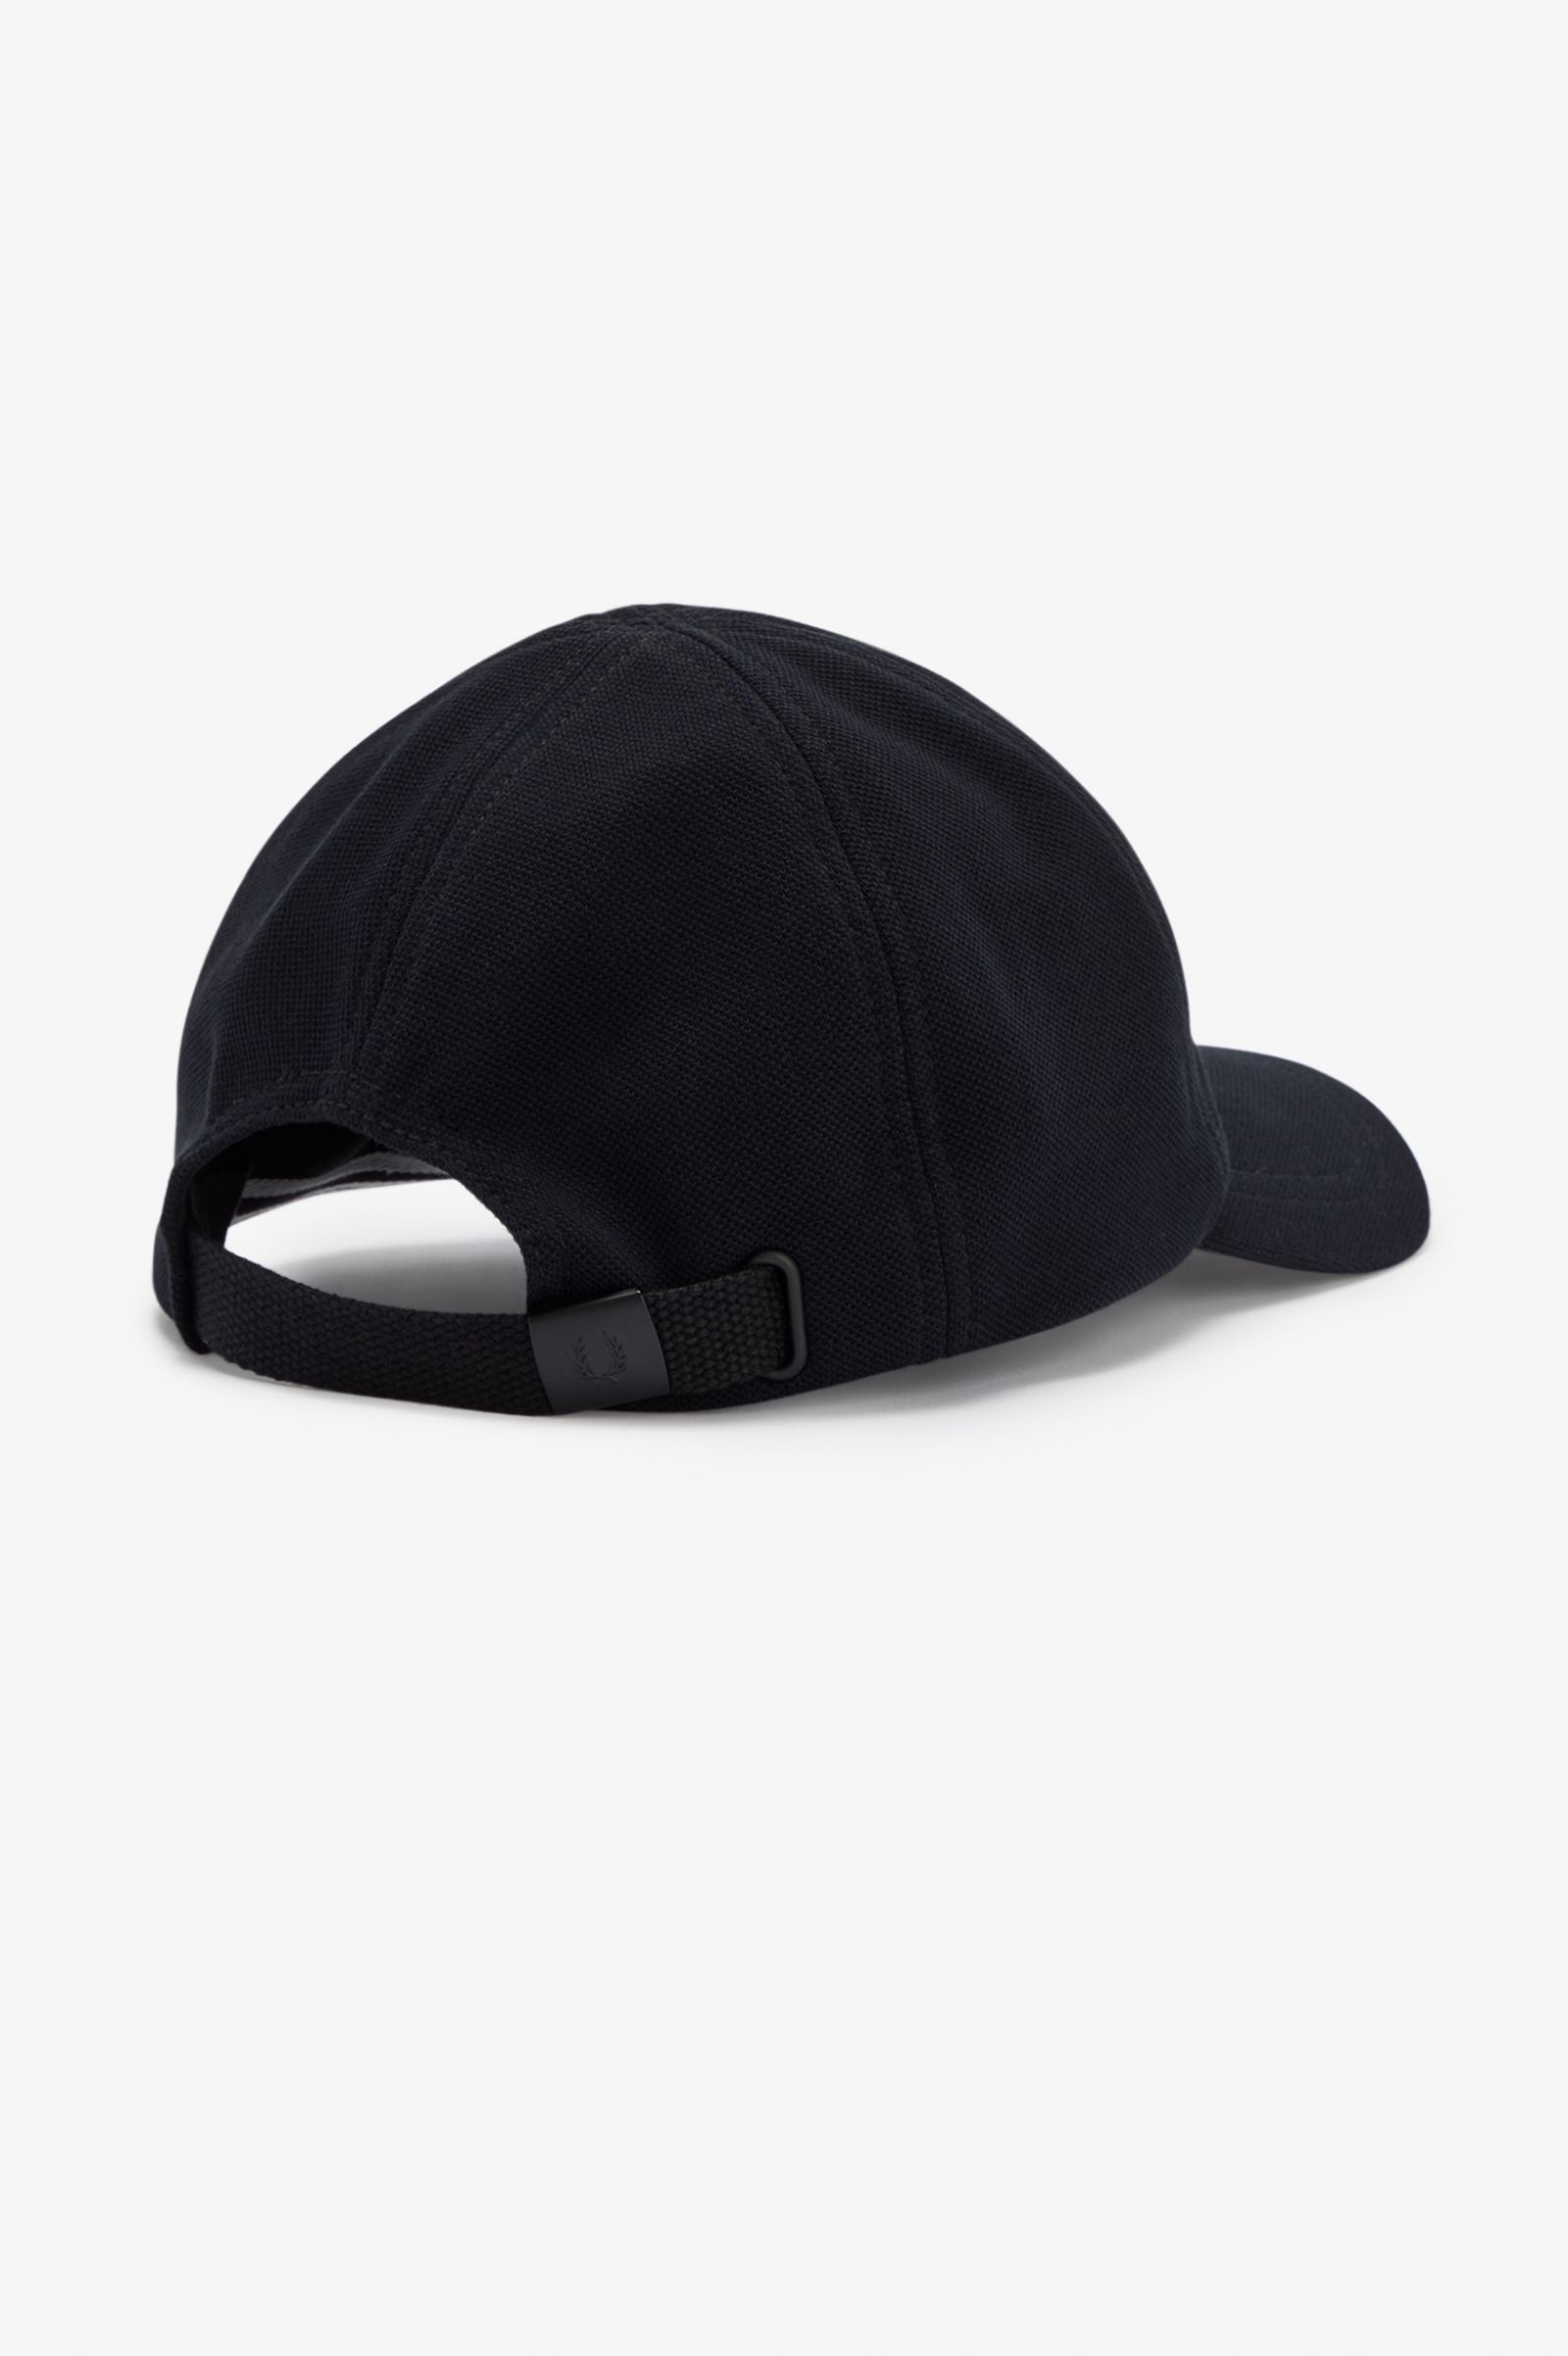 BLACK PIQUE CLASSIC CAP – Posers Hollywood